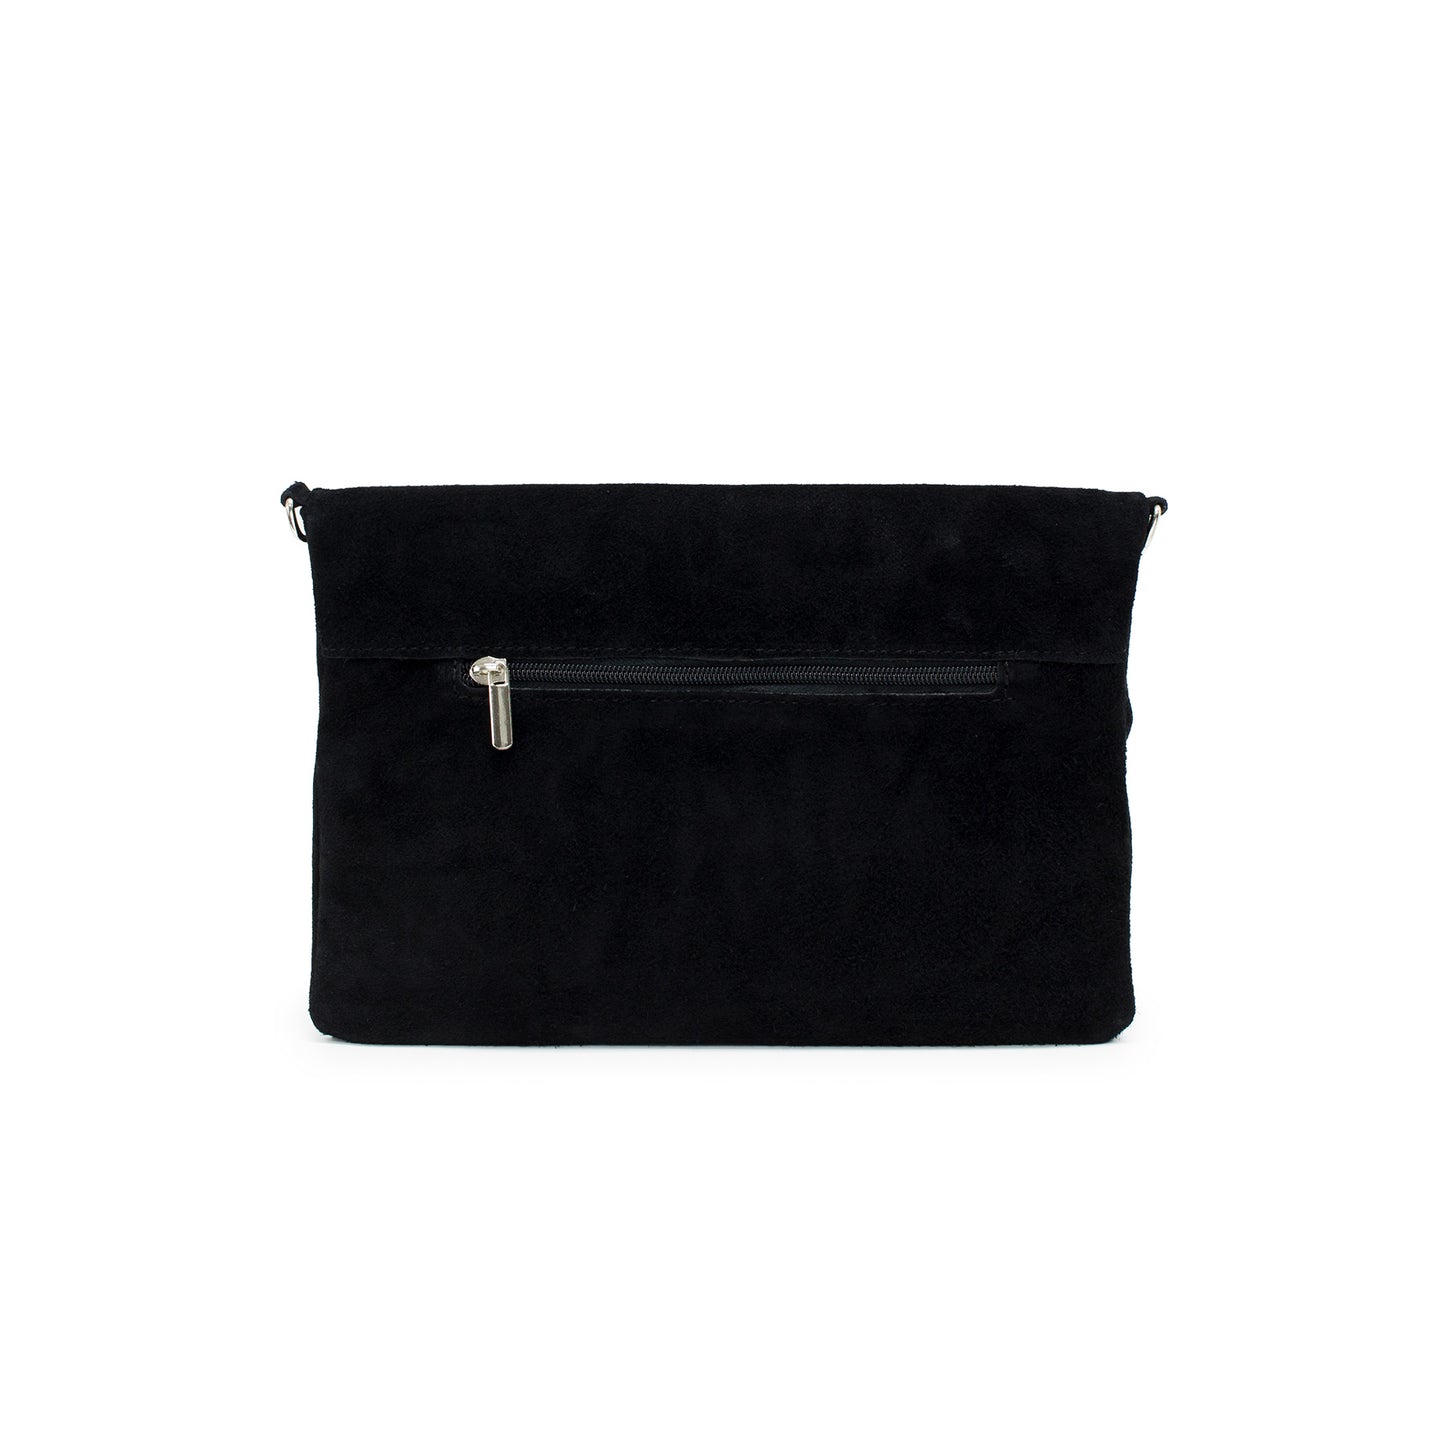 Black Suede Clutch Bag